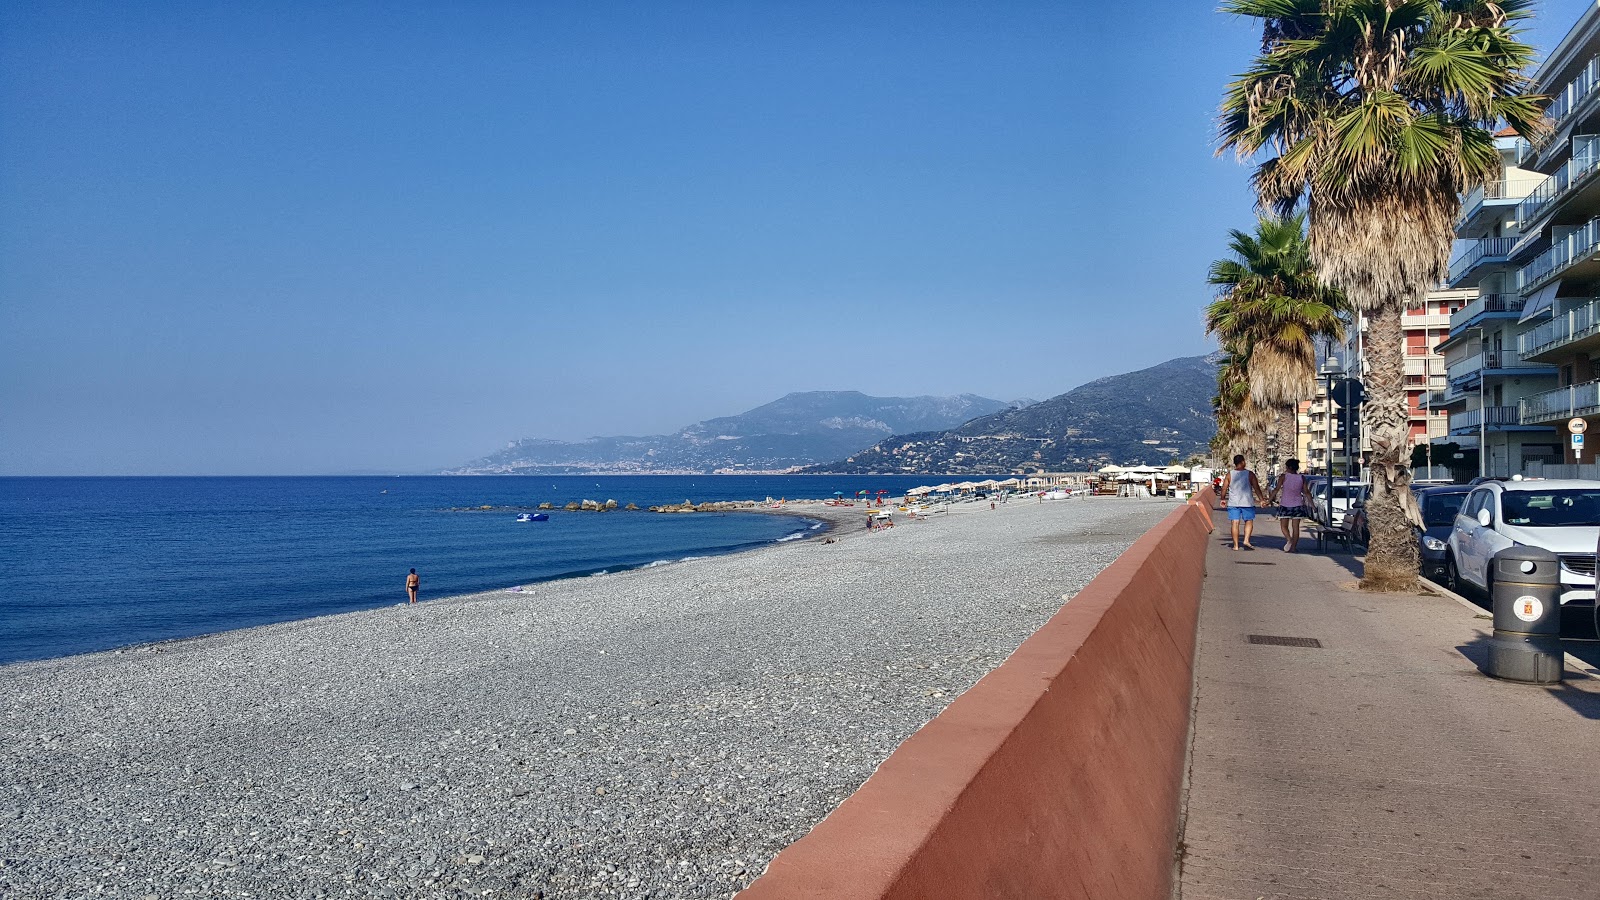 Foto av Spiaggia Ventimiglia med stora vikar